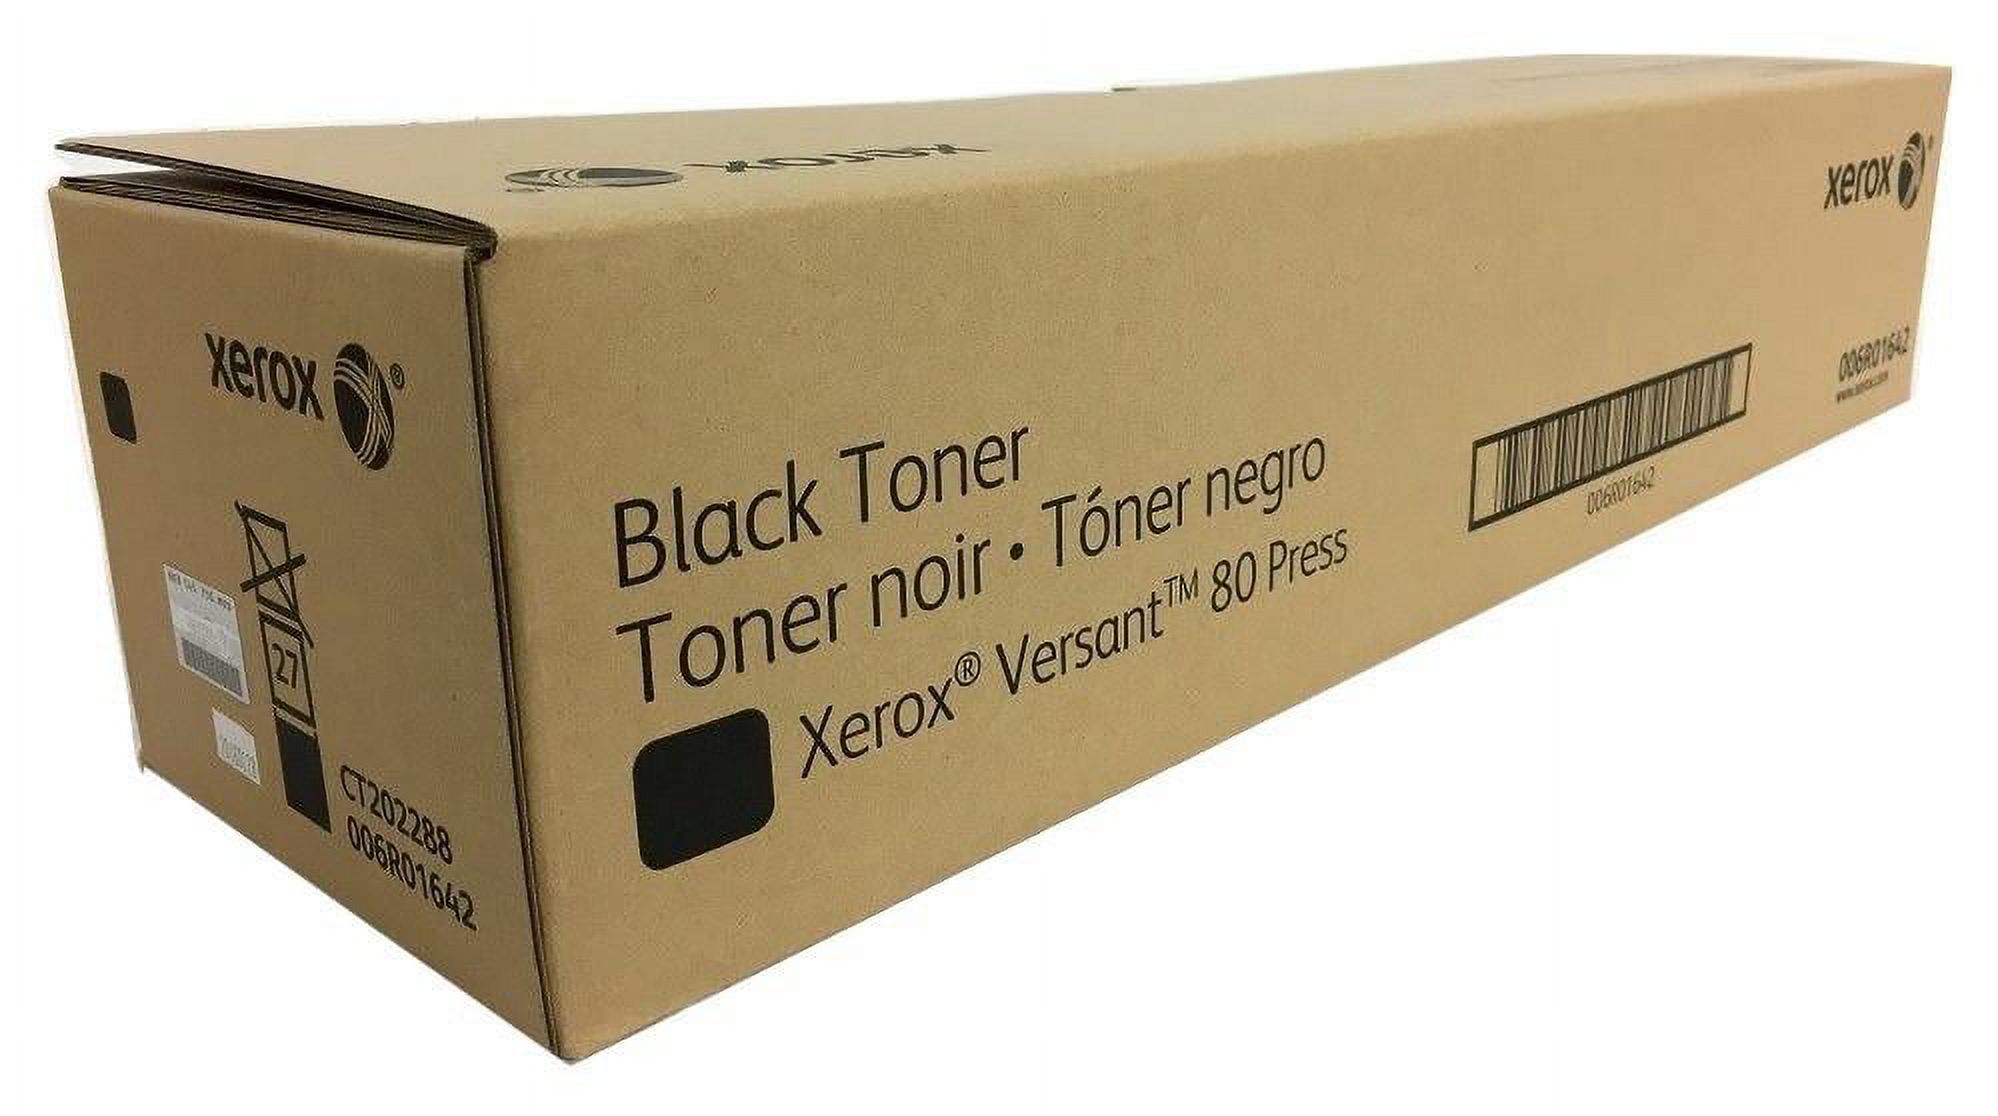 Xerox Black Toner Cartridge, 20000 Yield (6R1642) - image 1 of 2